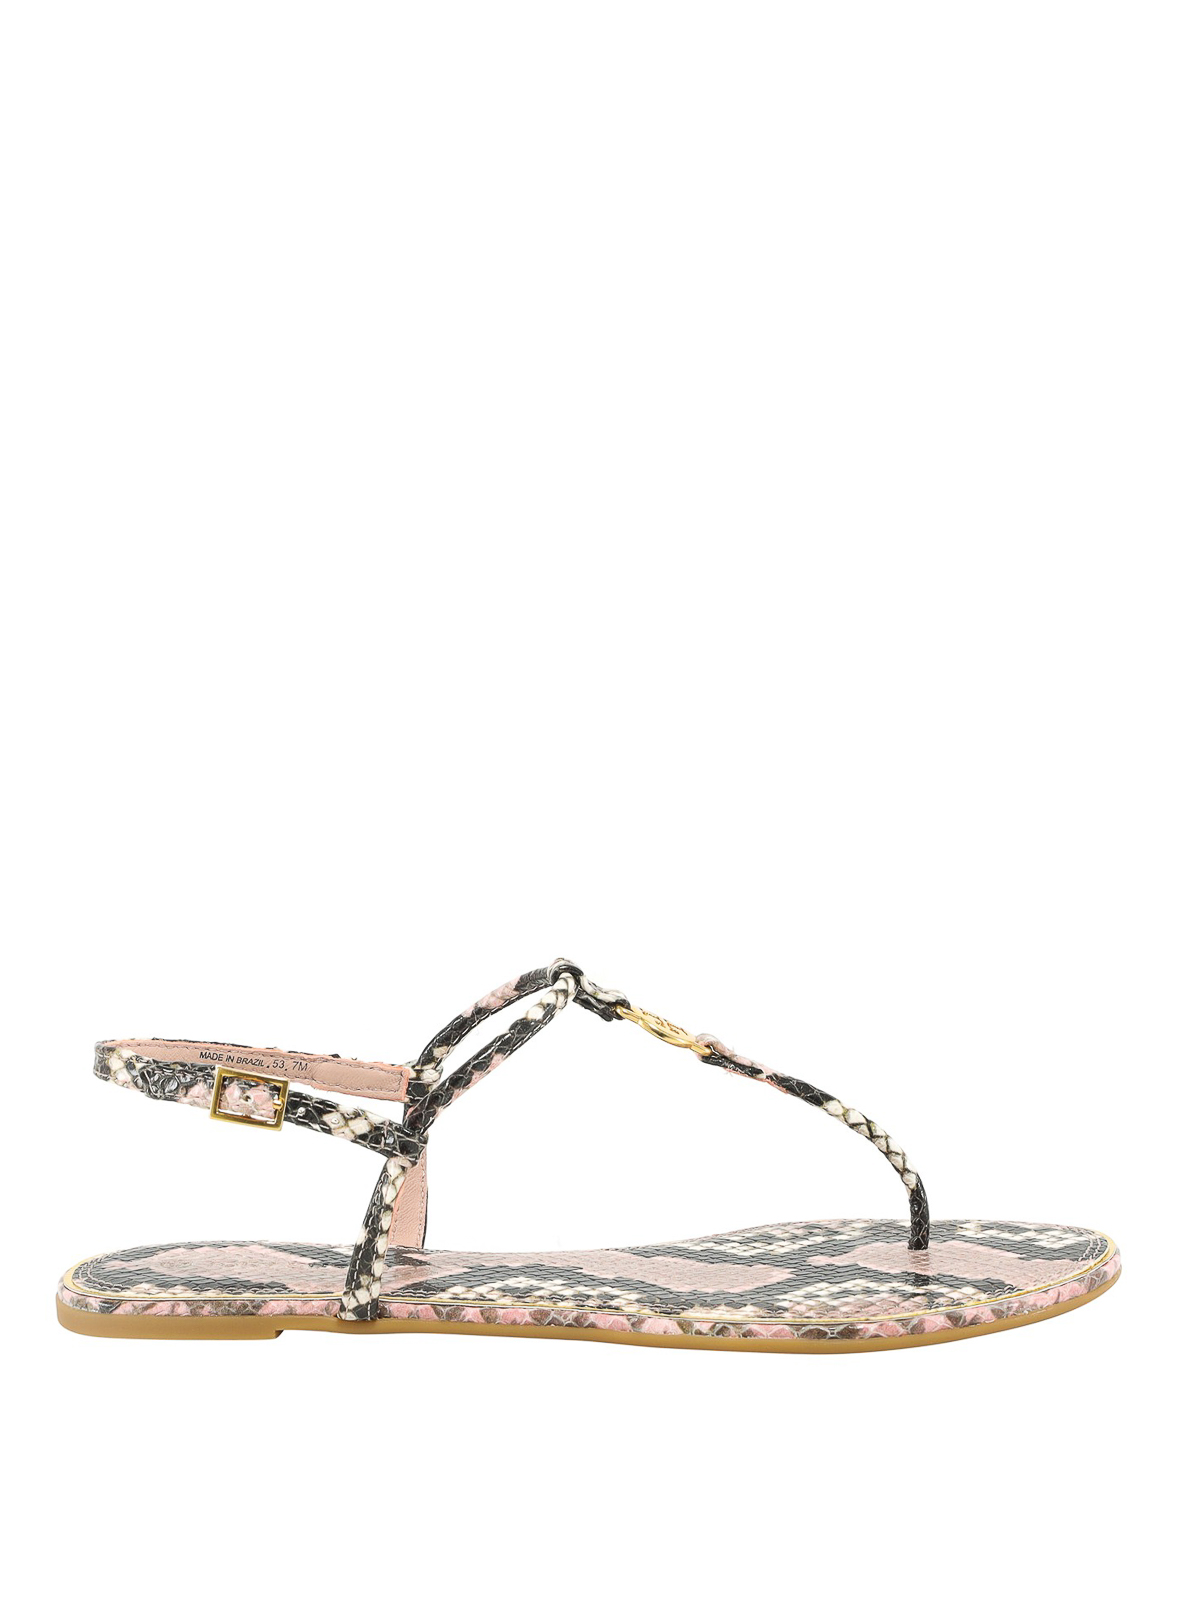 Sandals Tory Burch - Emmy llat sandals - 76487681 | Shop online at iKRIX